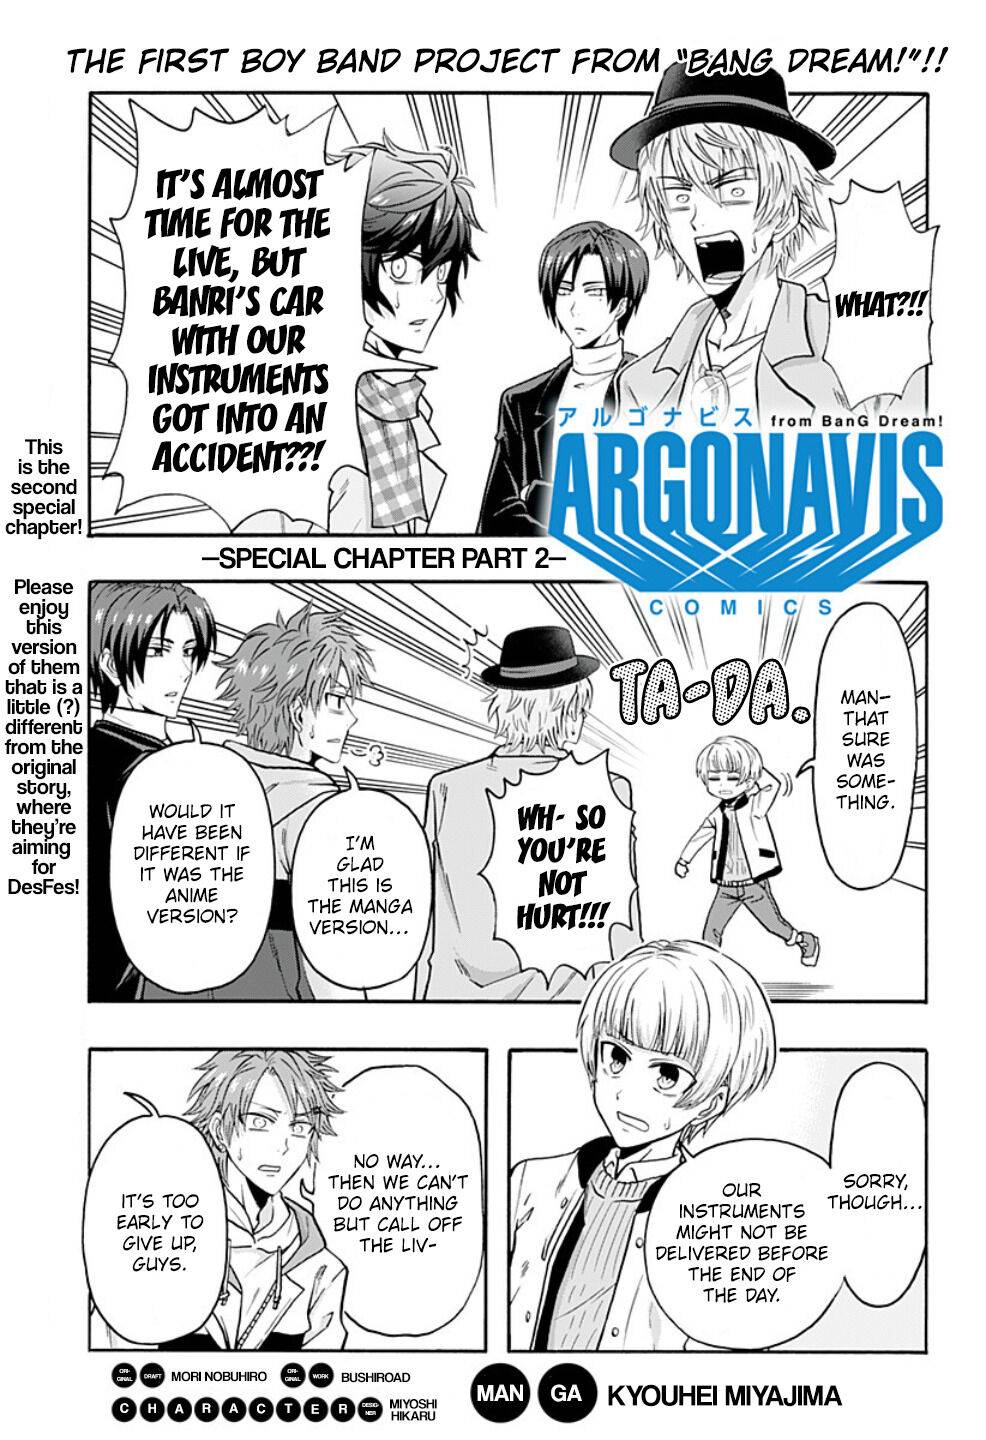 Argonavis From Bang Dream! Comics - chapter 11.5 - #1